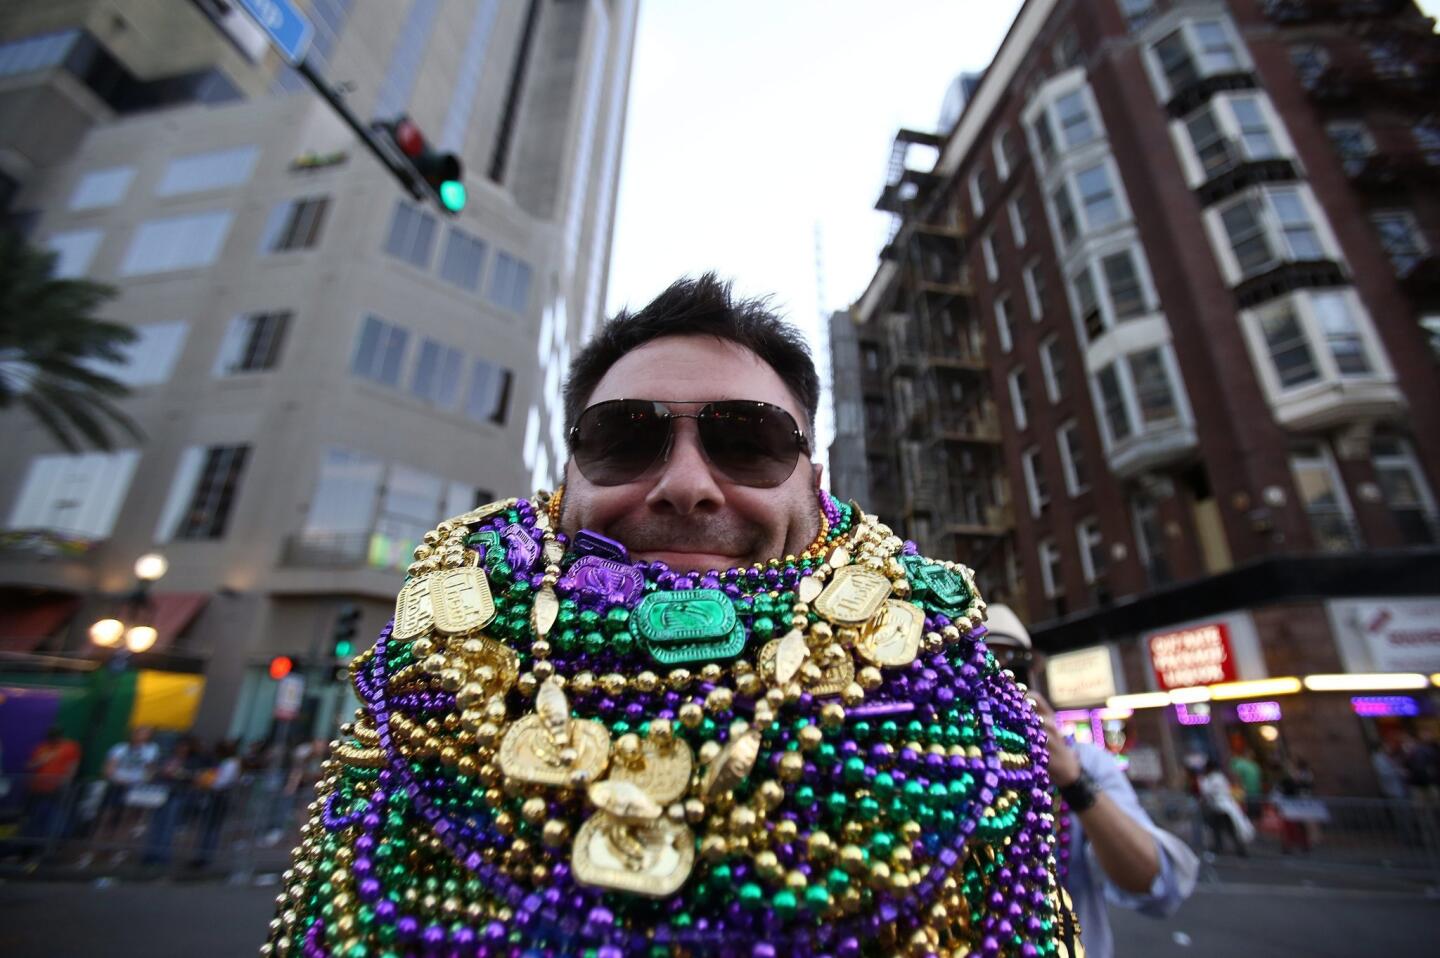 Mardi Gras celebrations in New Orleans